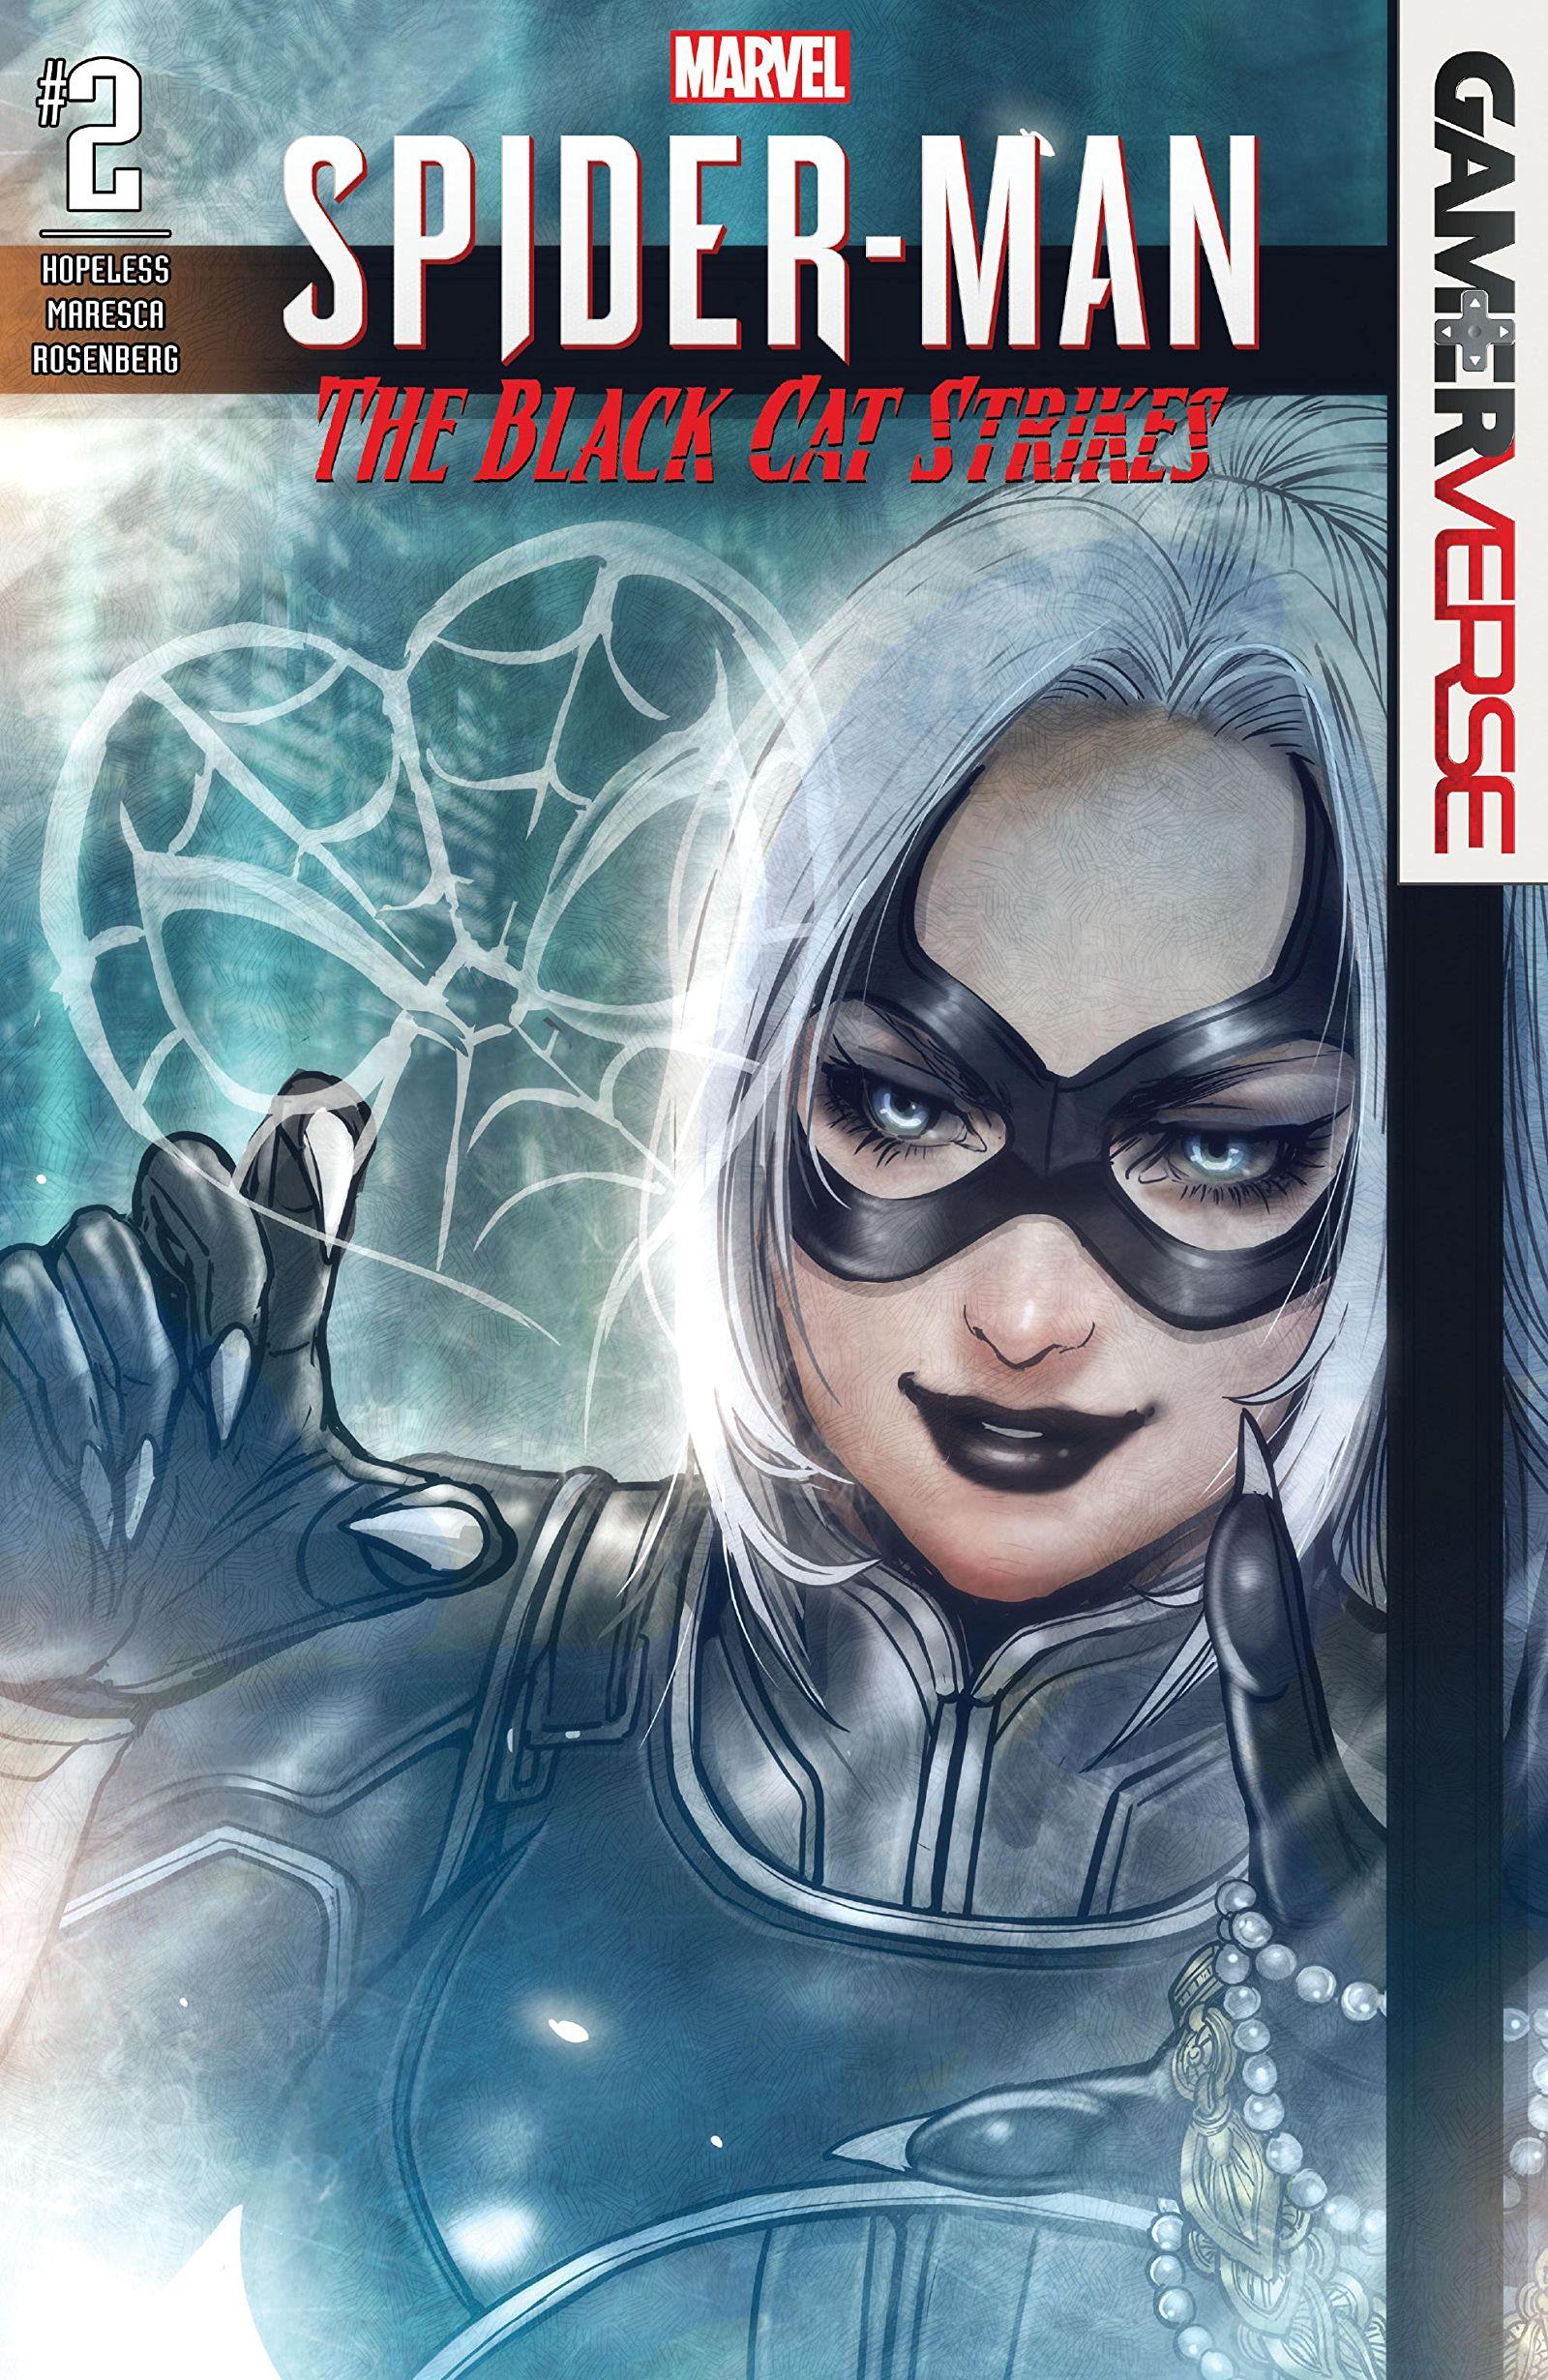 Marvel's Spider-Man: The Black Cat Strikes Vol. 1 #2